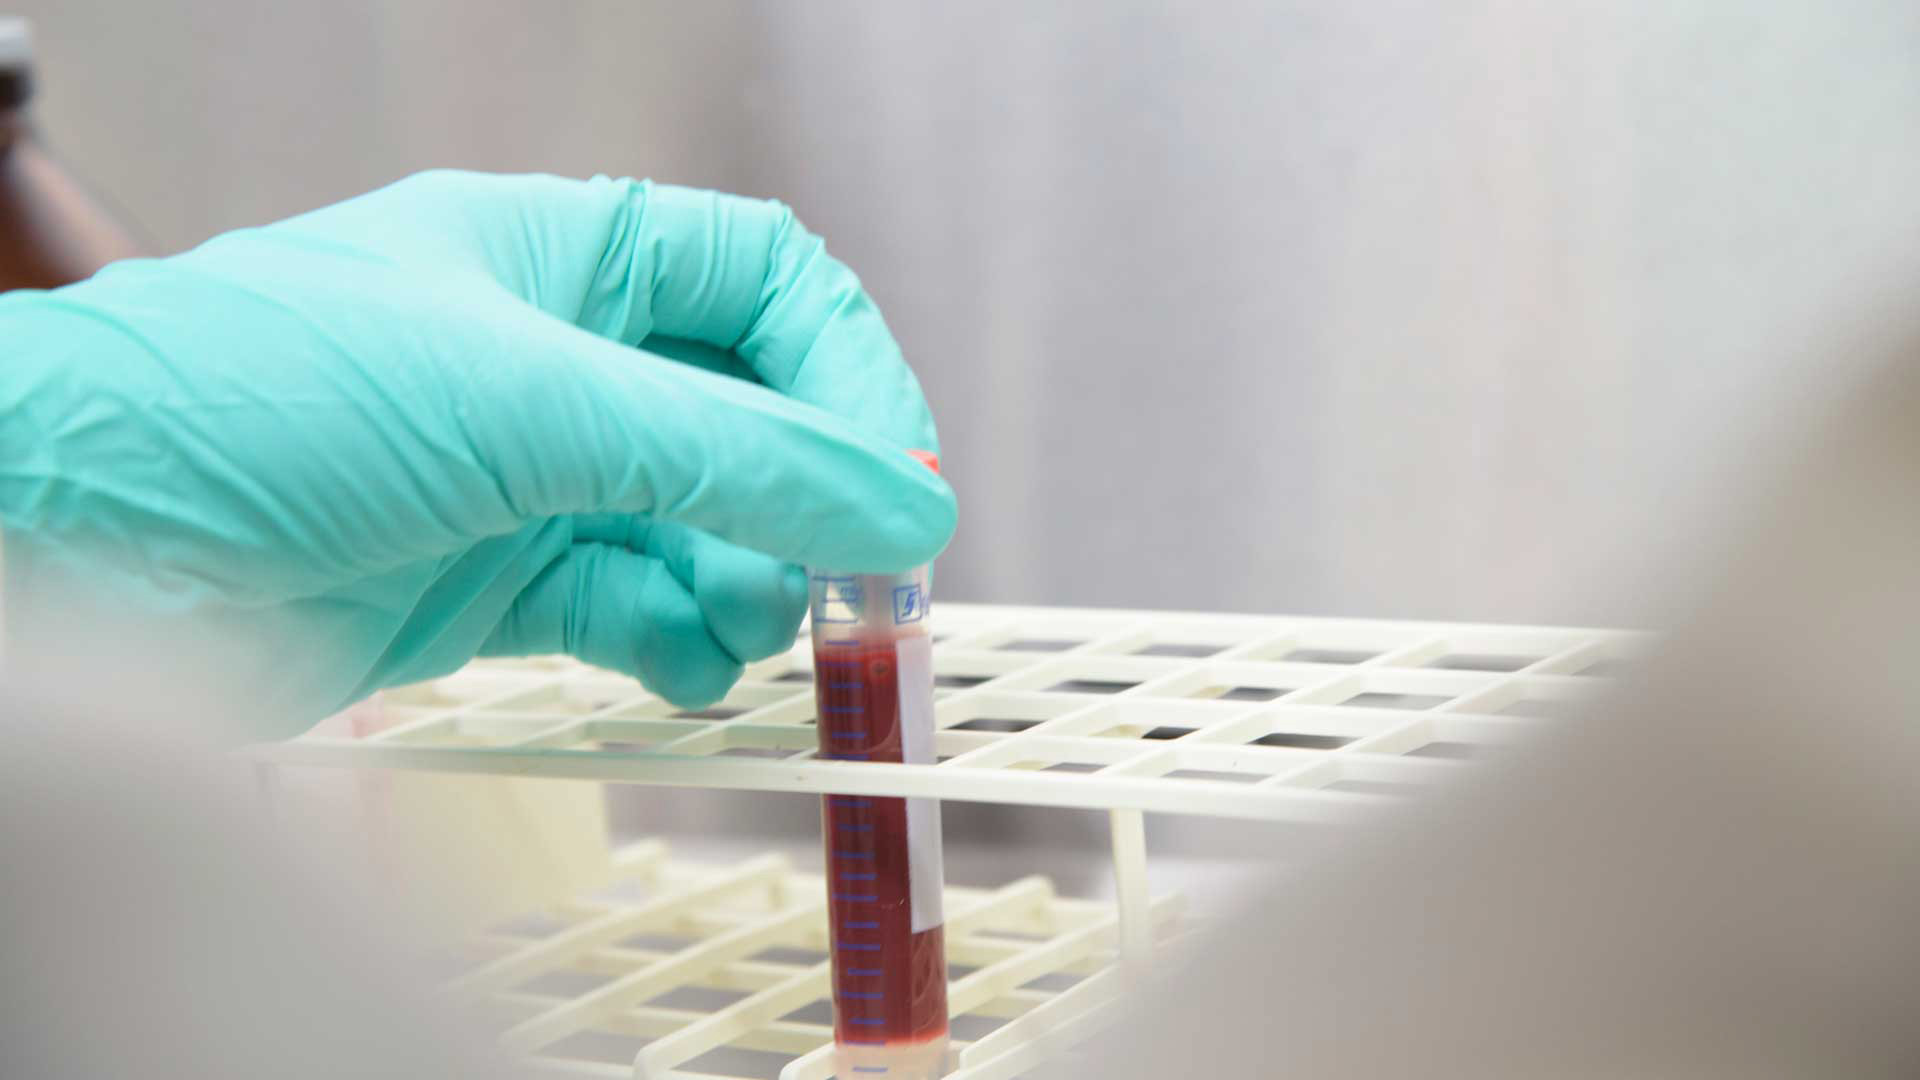 UA antibody testing, June 2020